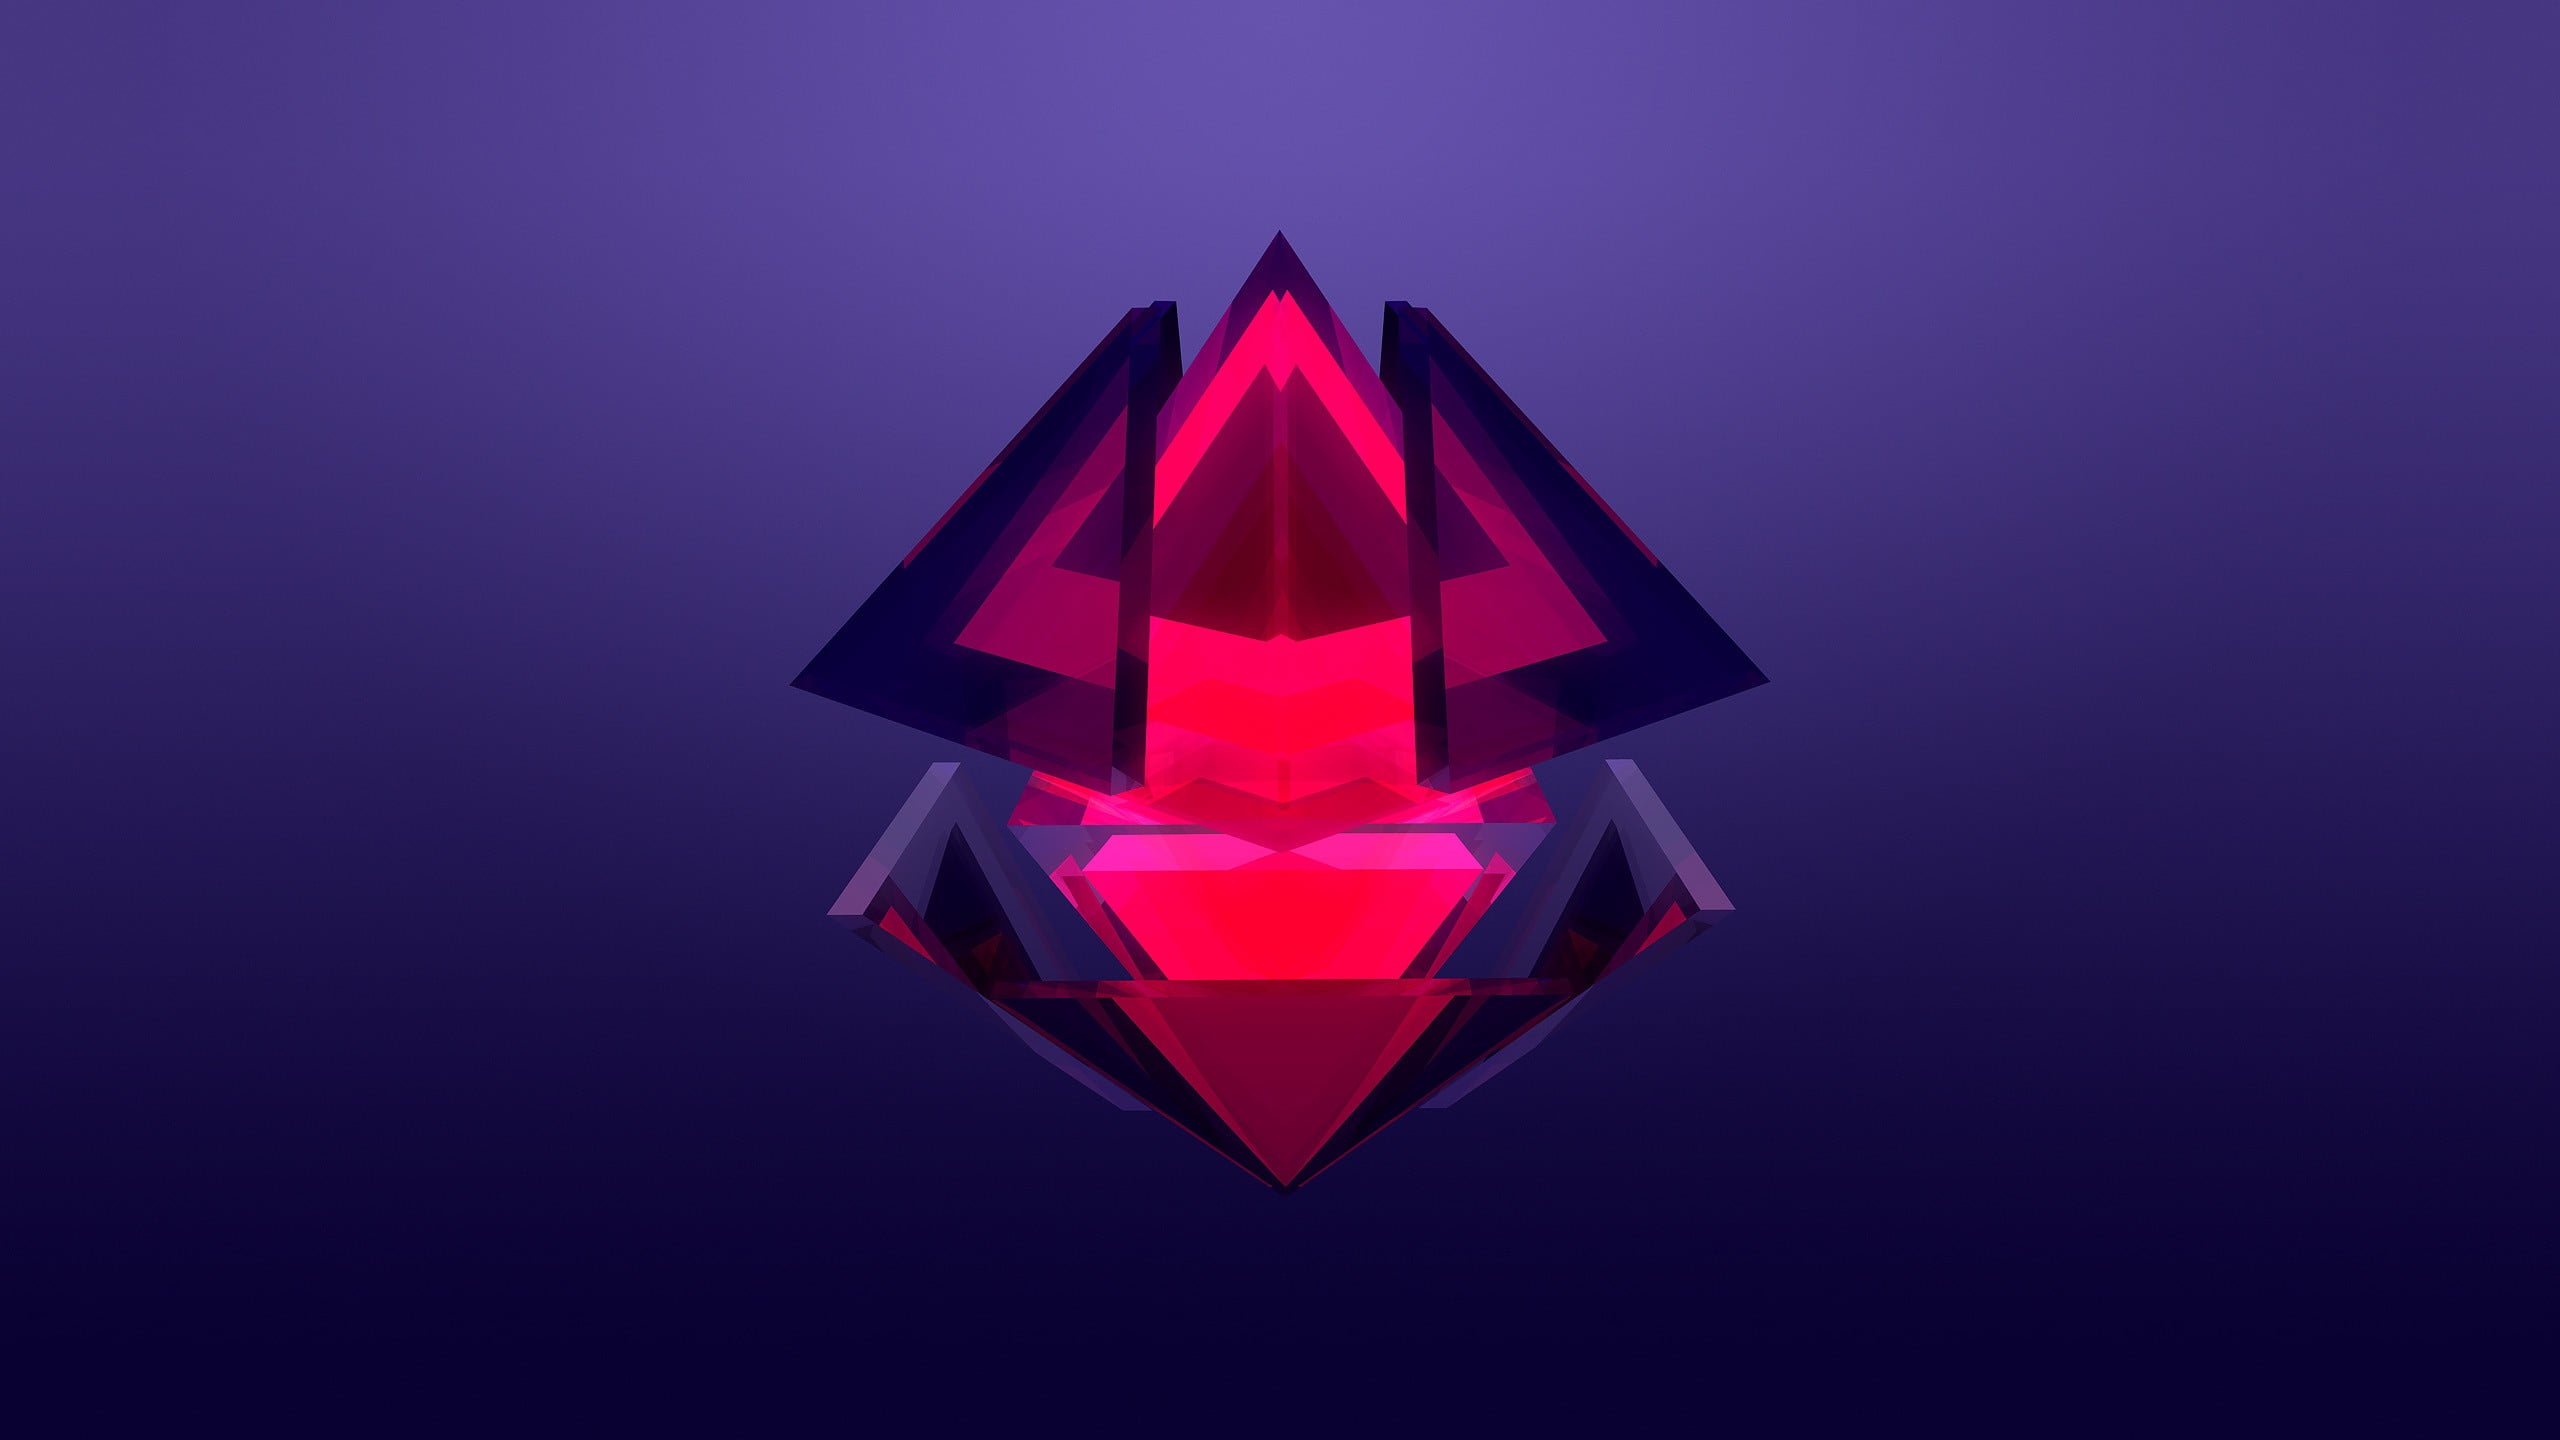 Diamond shaped red logo illustration